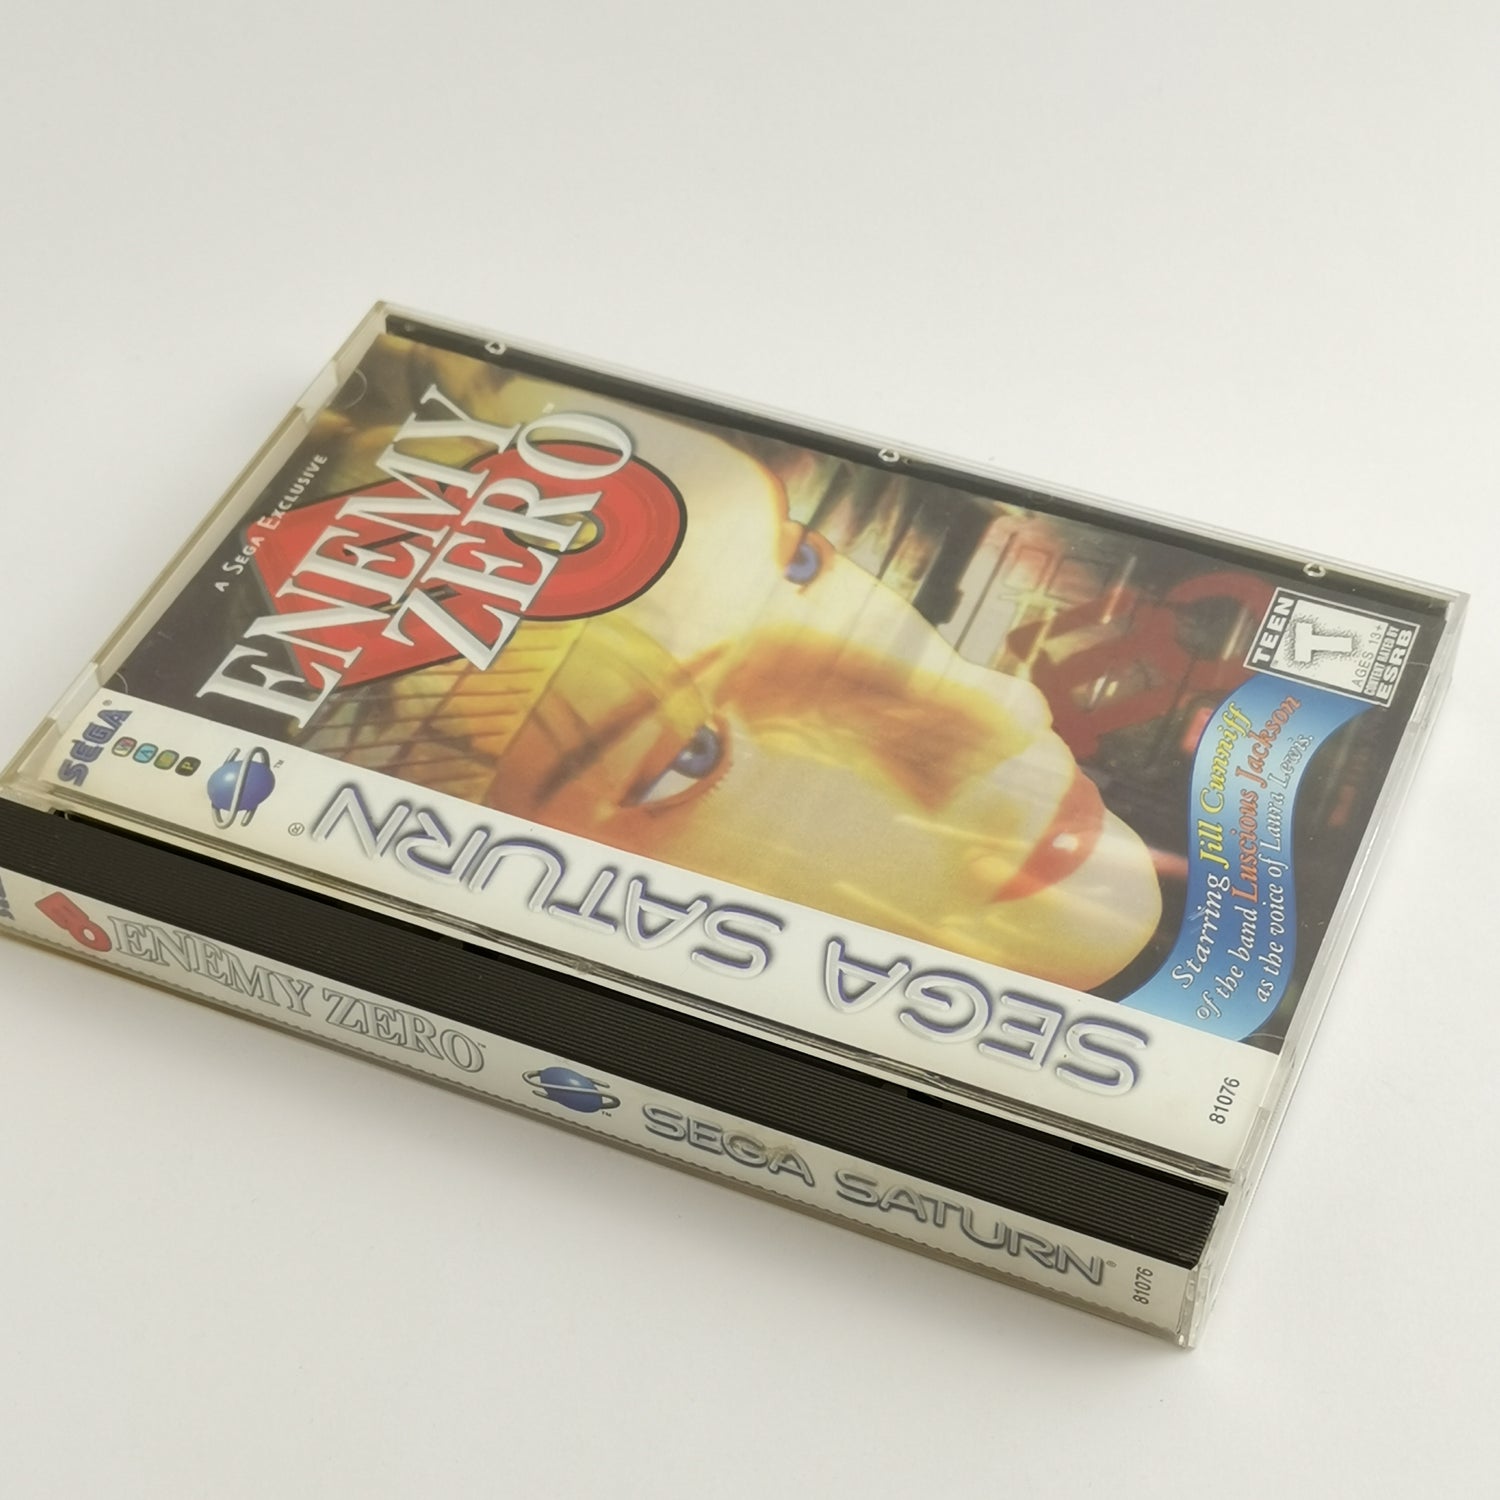 Sega Saturn Game: Enemy Zero - Original Packaging & Instructions | NTSC-U/C USA